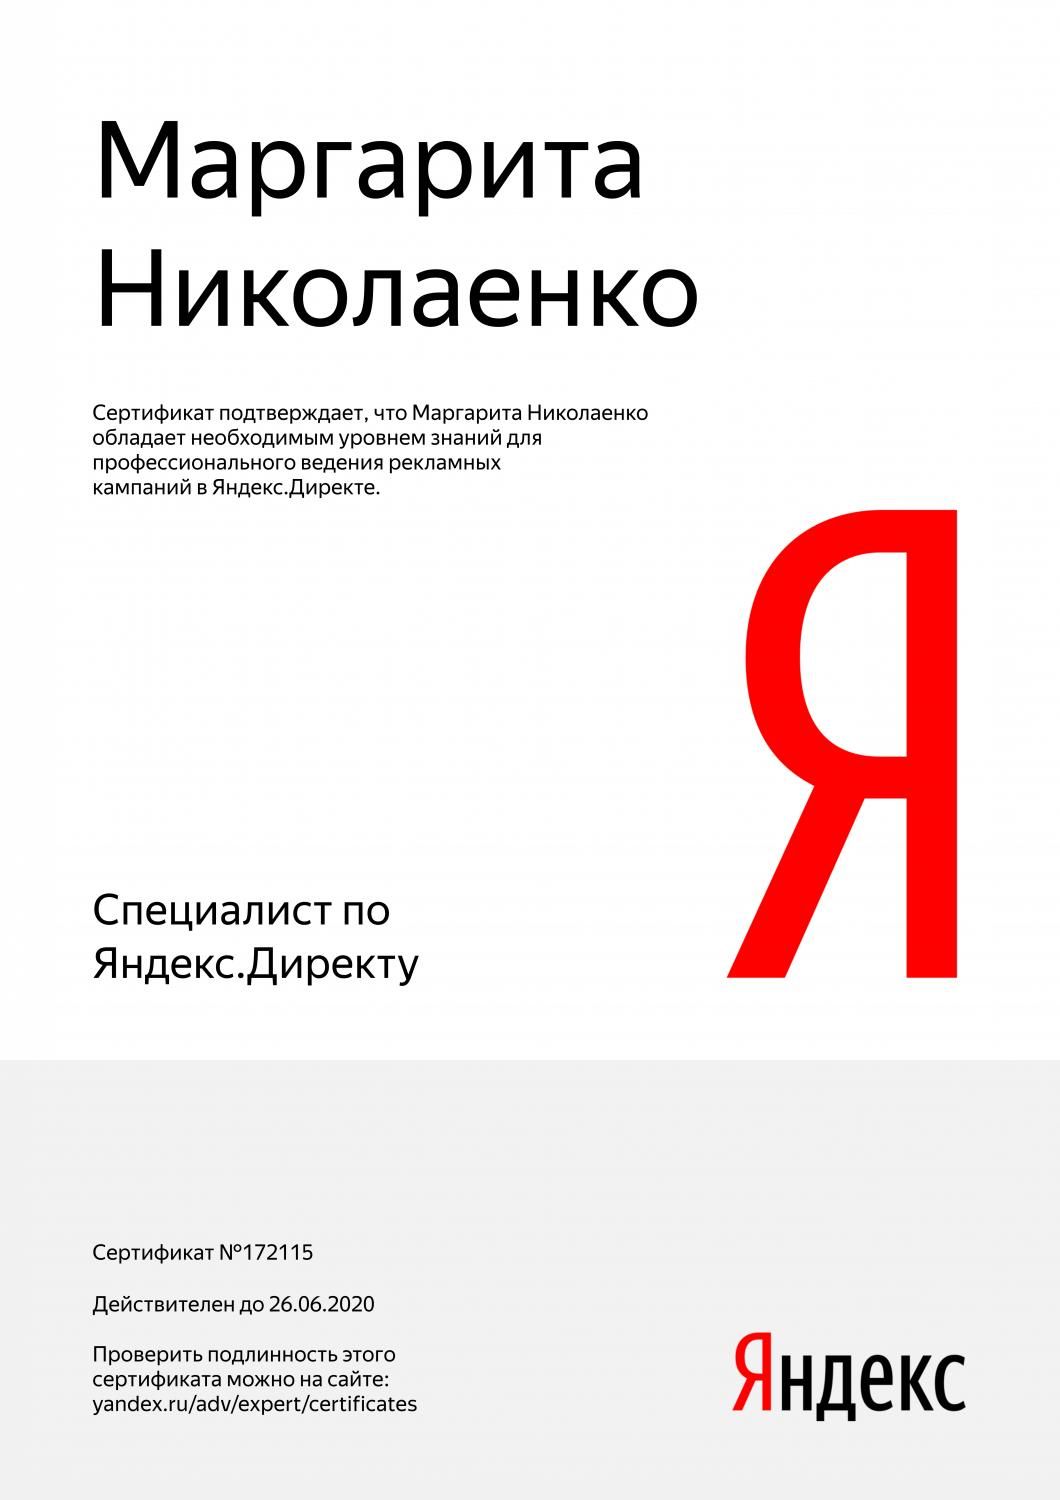 Сертификат специалиста Яндекс. Директ - Николаенко М. в Челябинска